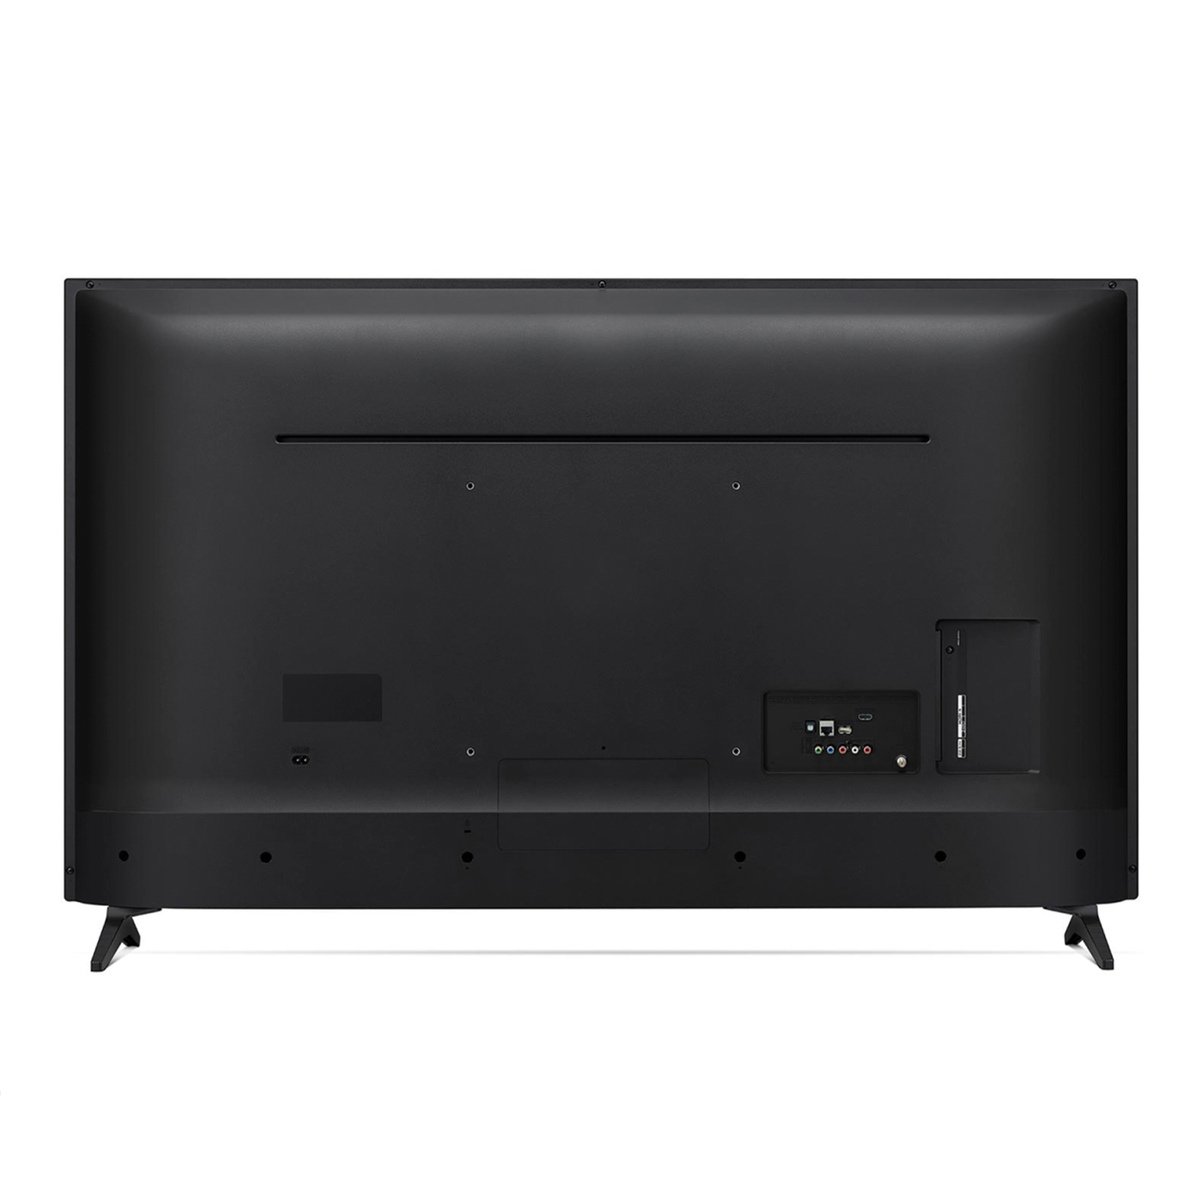 LG UHD 4K TV 55 Inch (UN7100PVA )UN71 Series, 4K Active HDR WebOS Smart ThinQ AI 2020